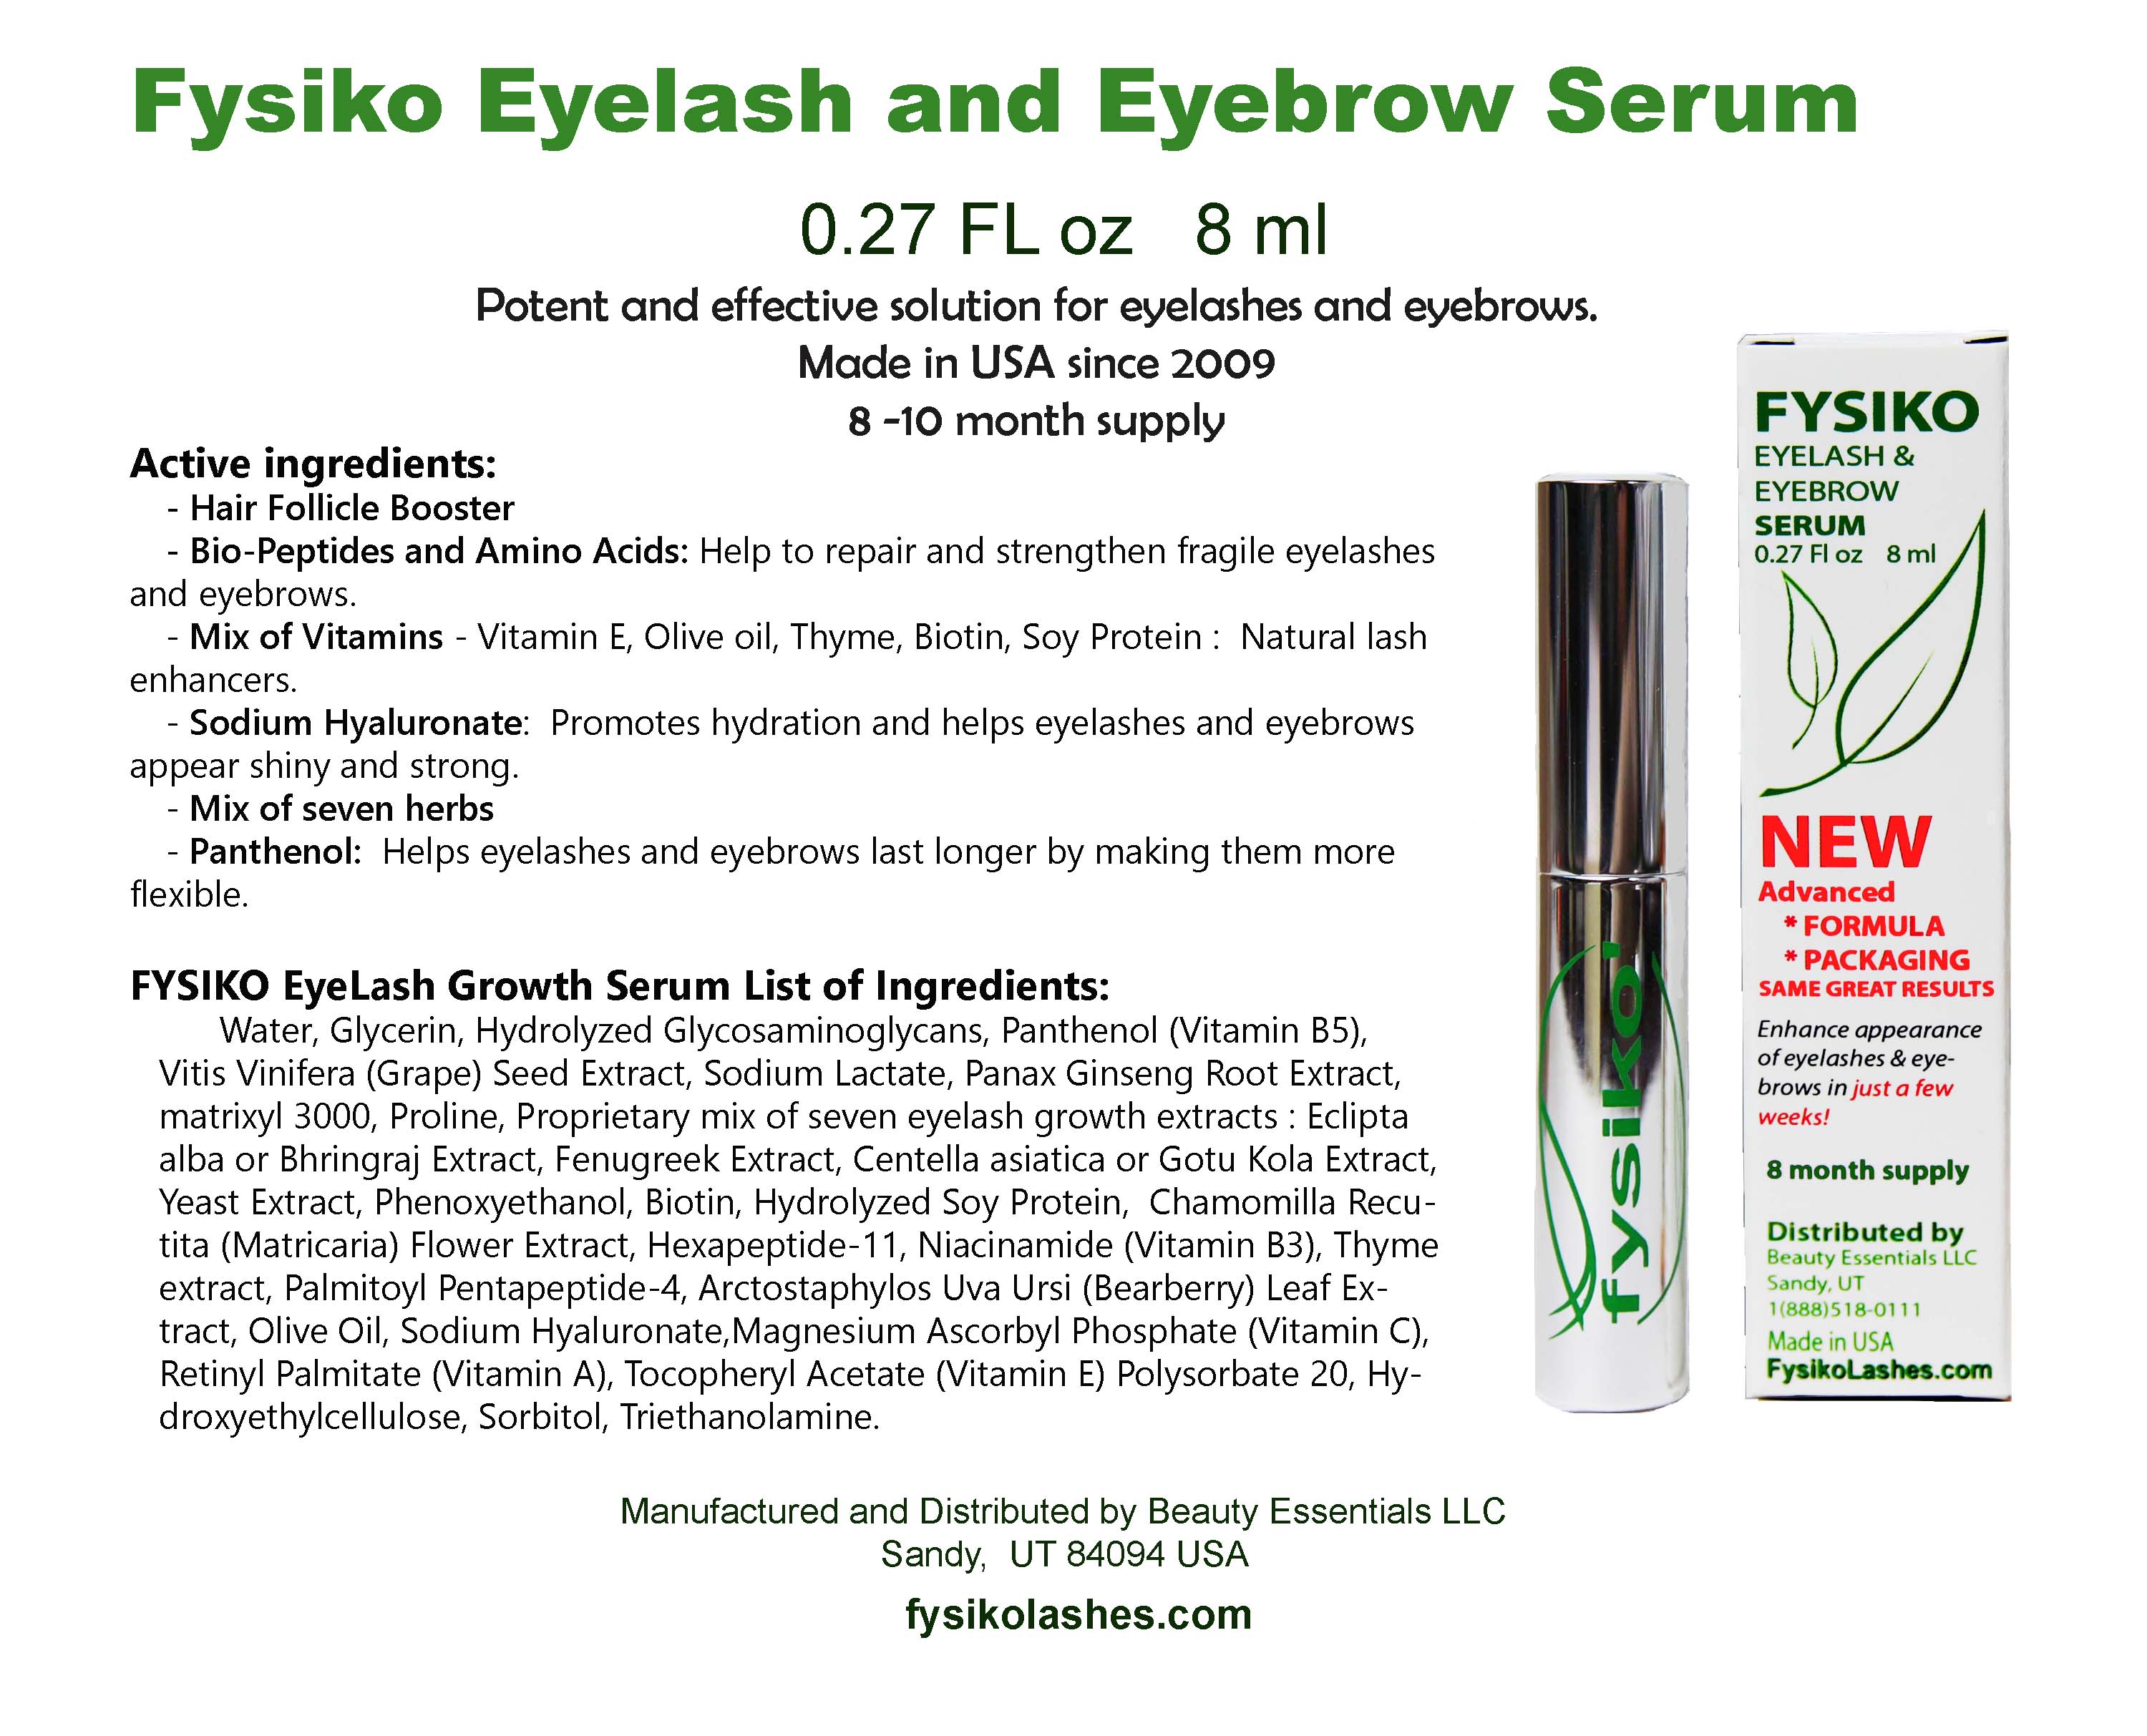 fysiko-eyelash-eyebrow-serum-facts